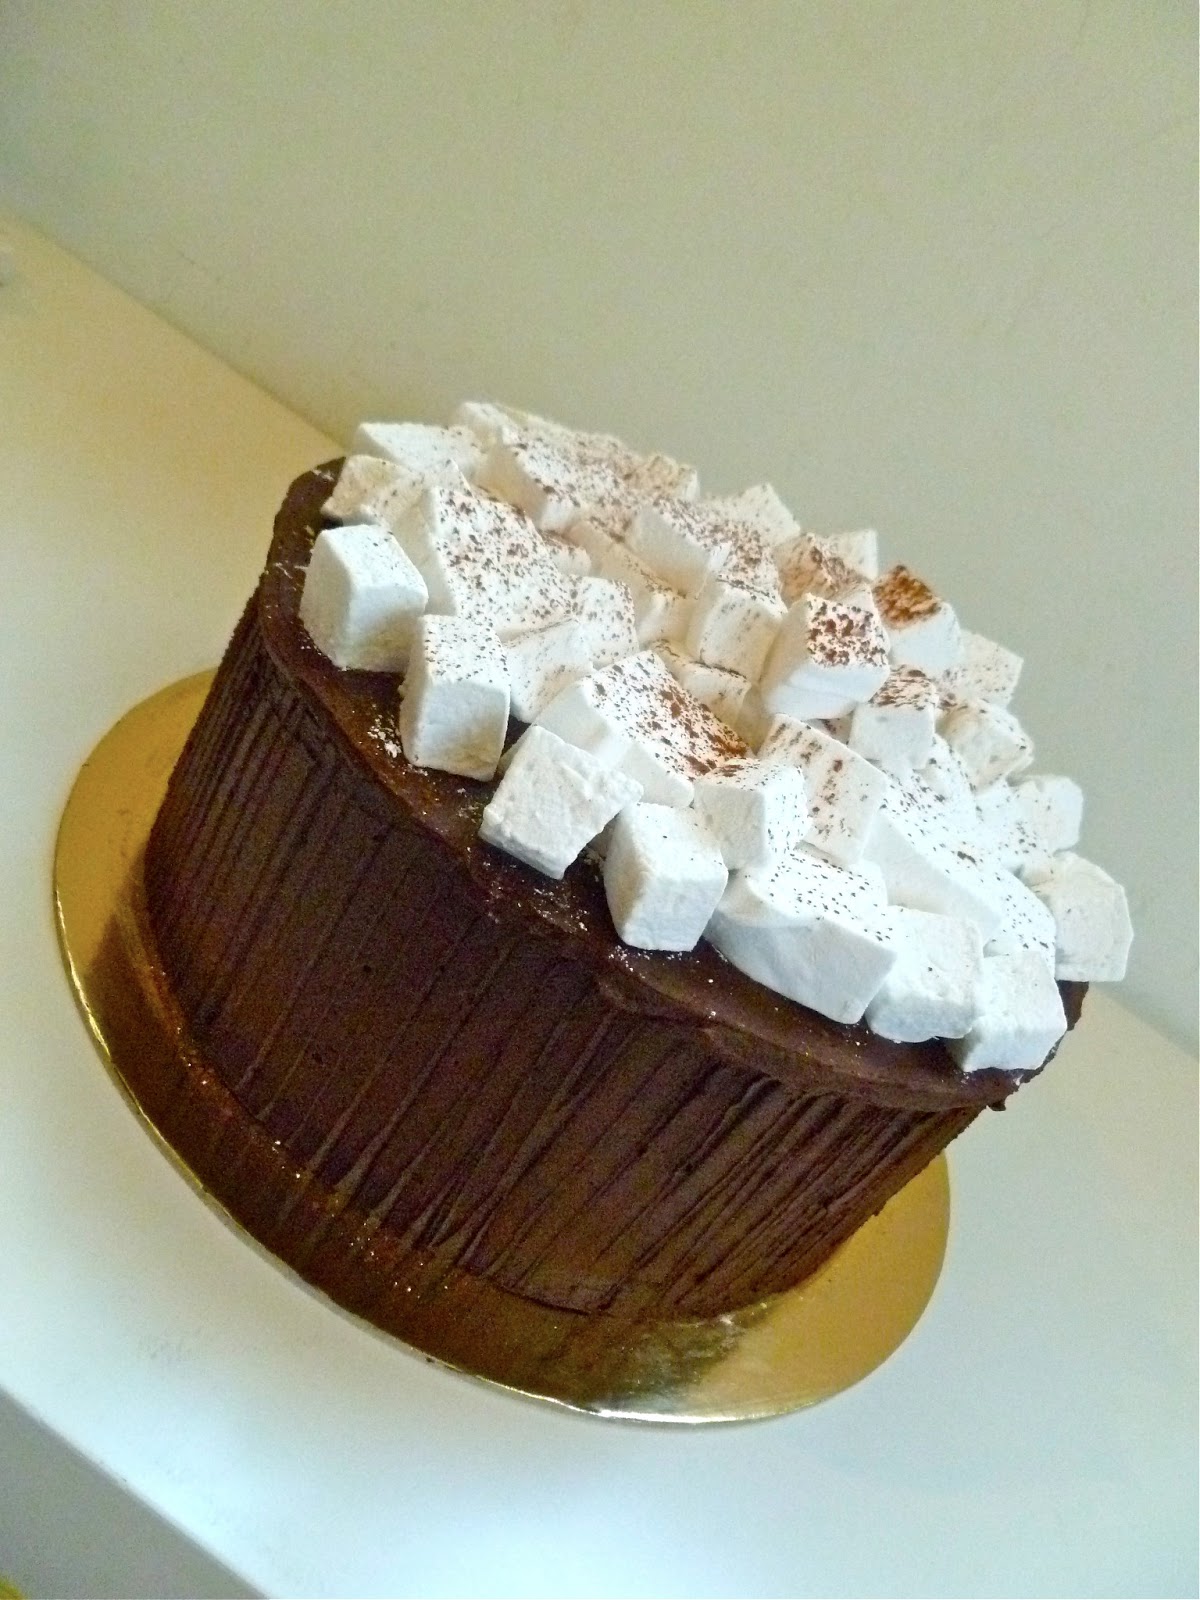 Design Bake Share Chocolate Cake with Homemade Marshmallows